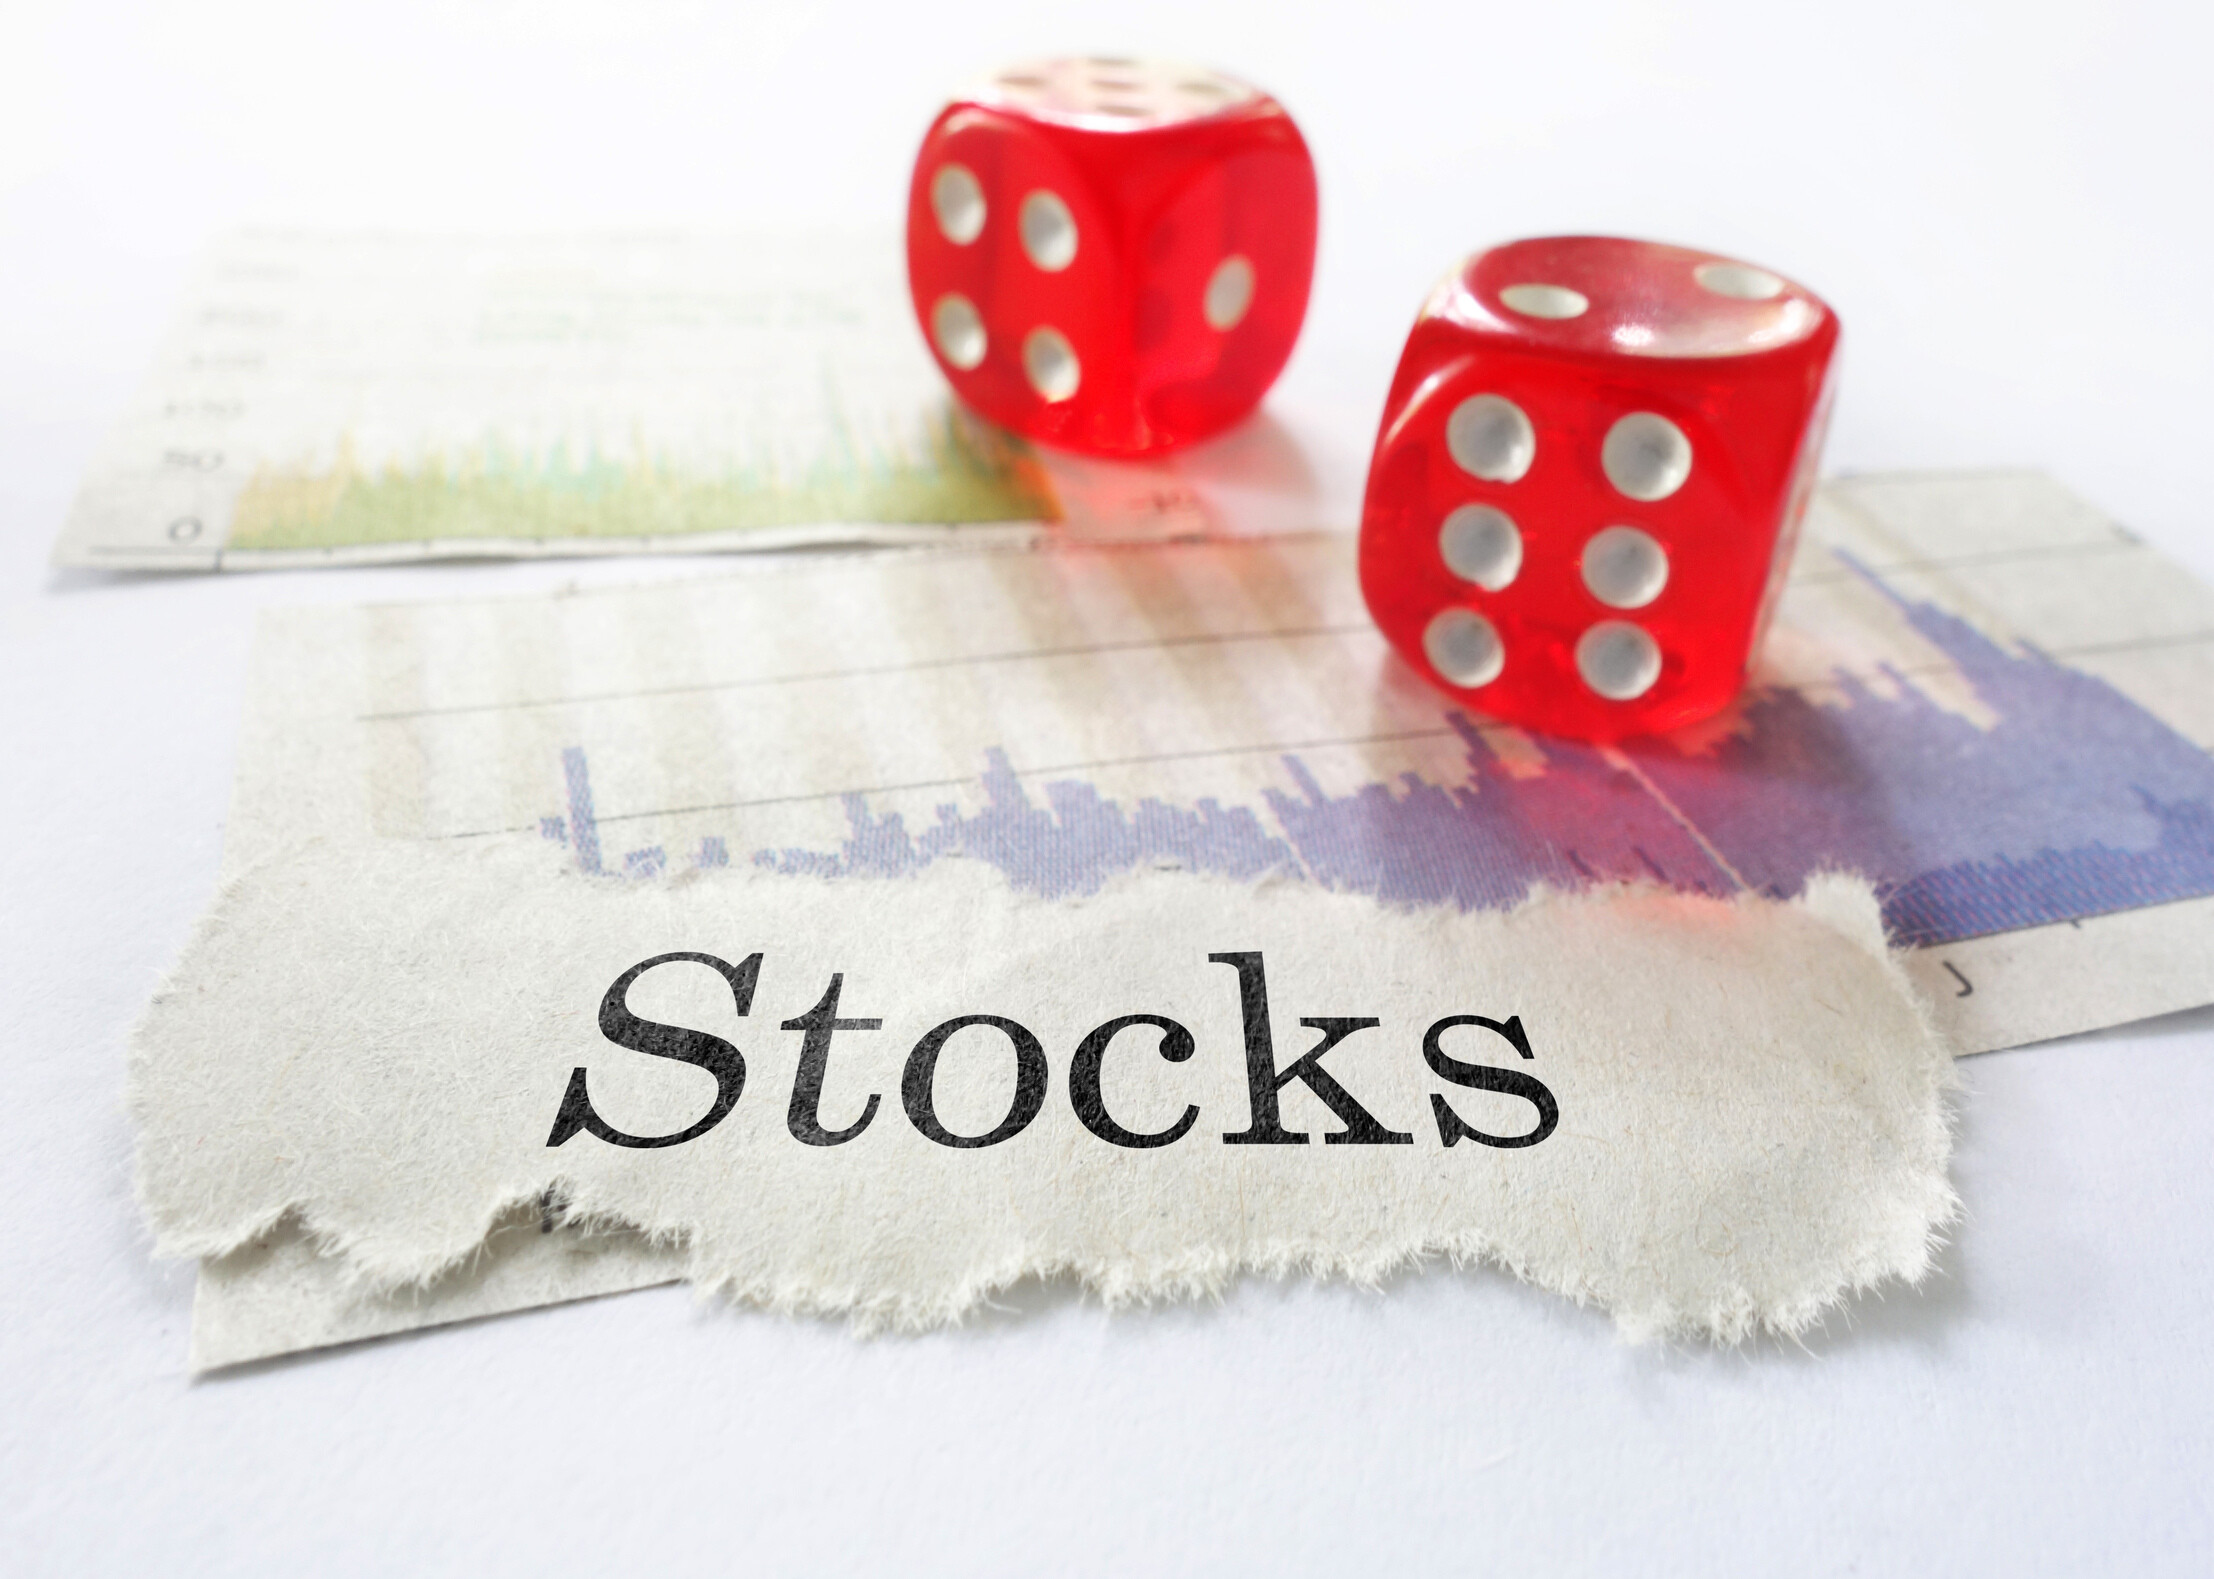 Trading Stocks